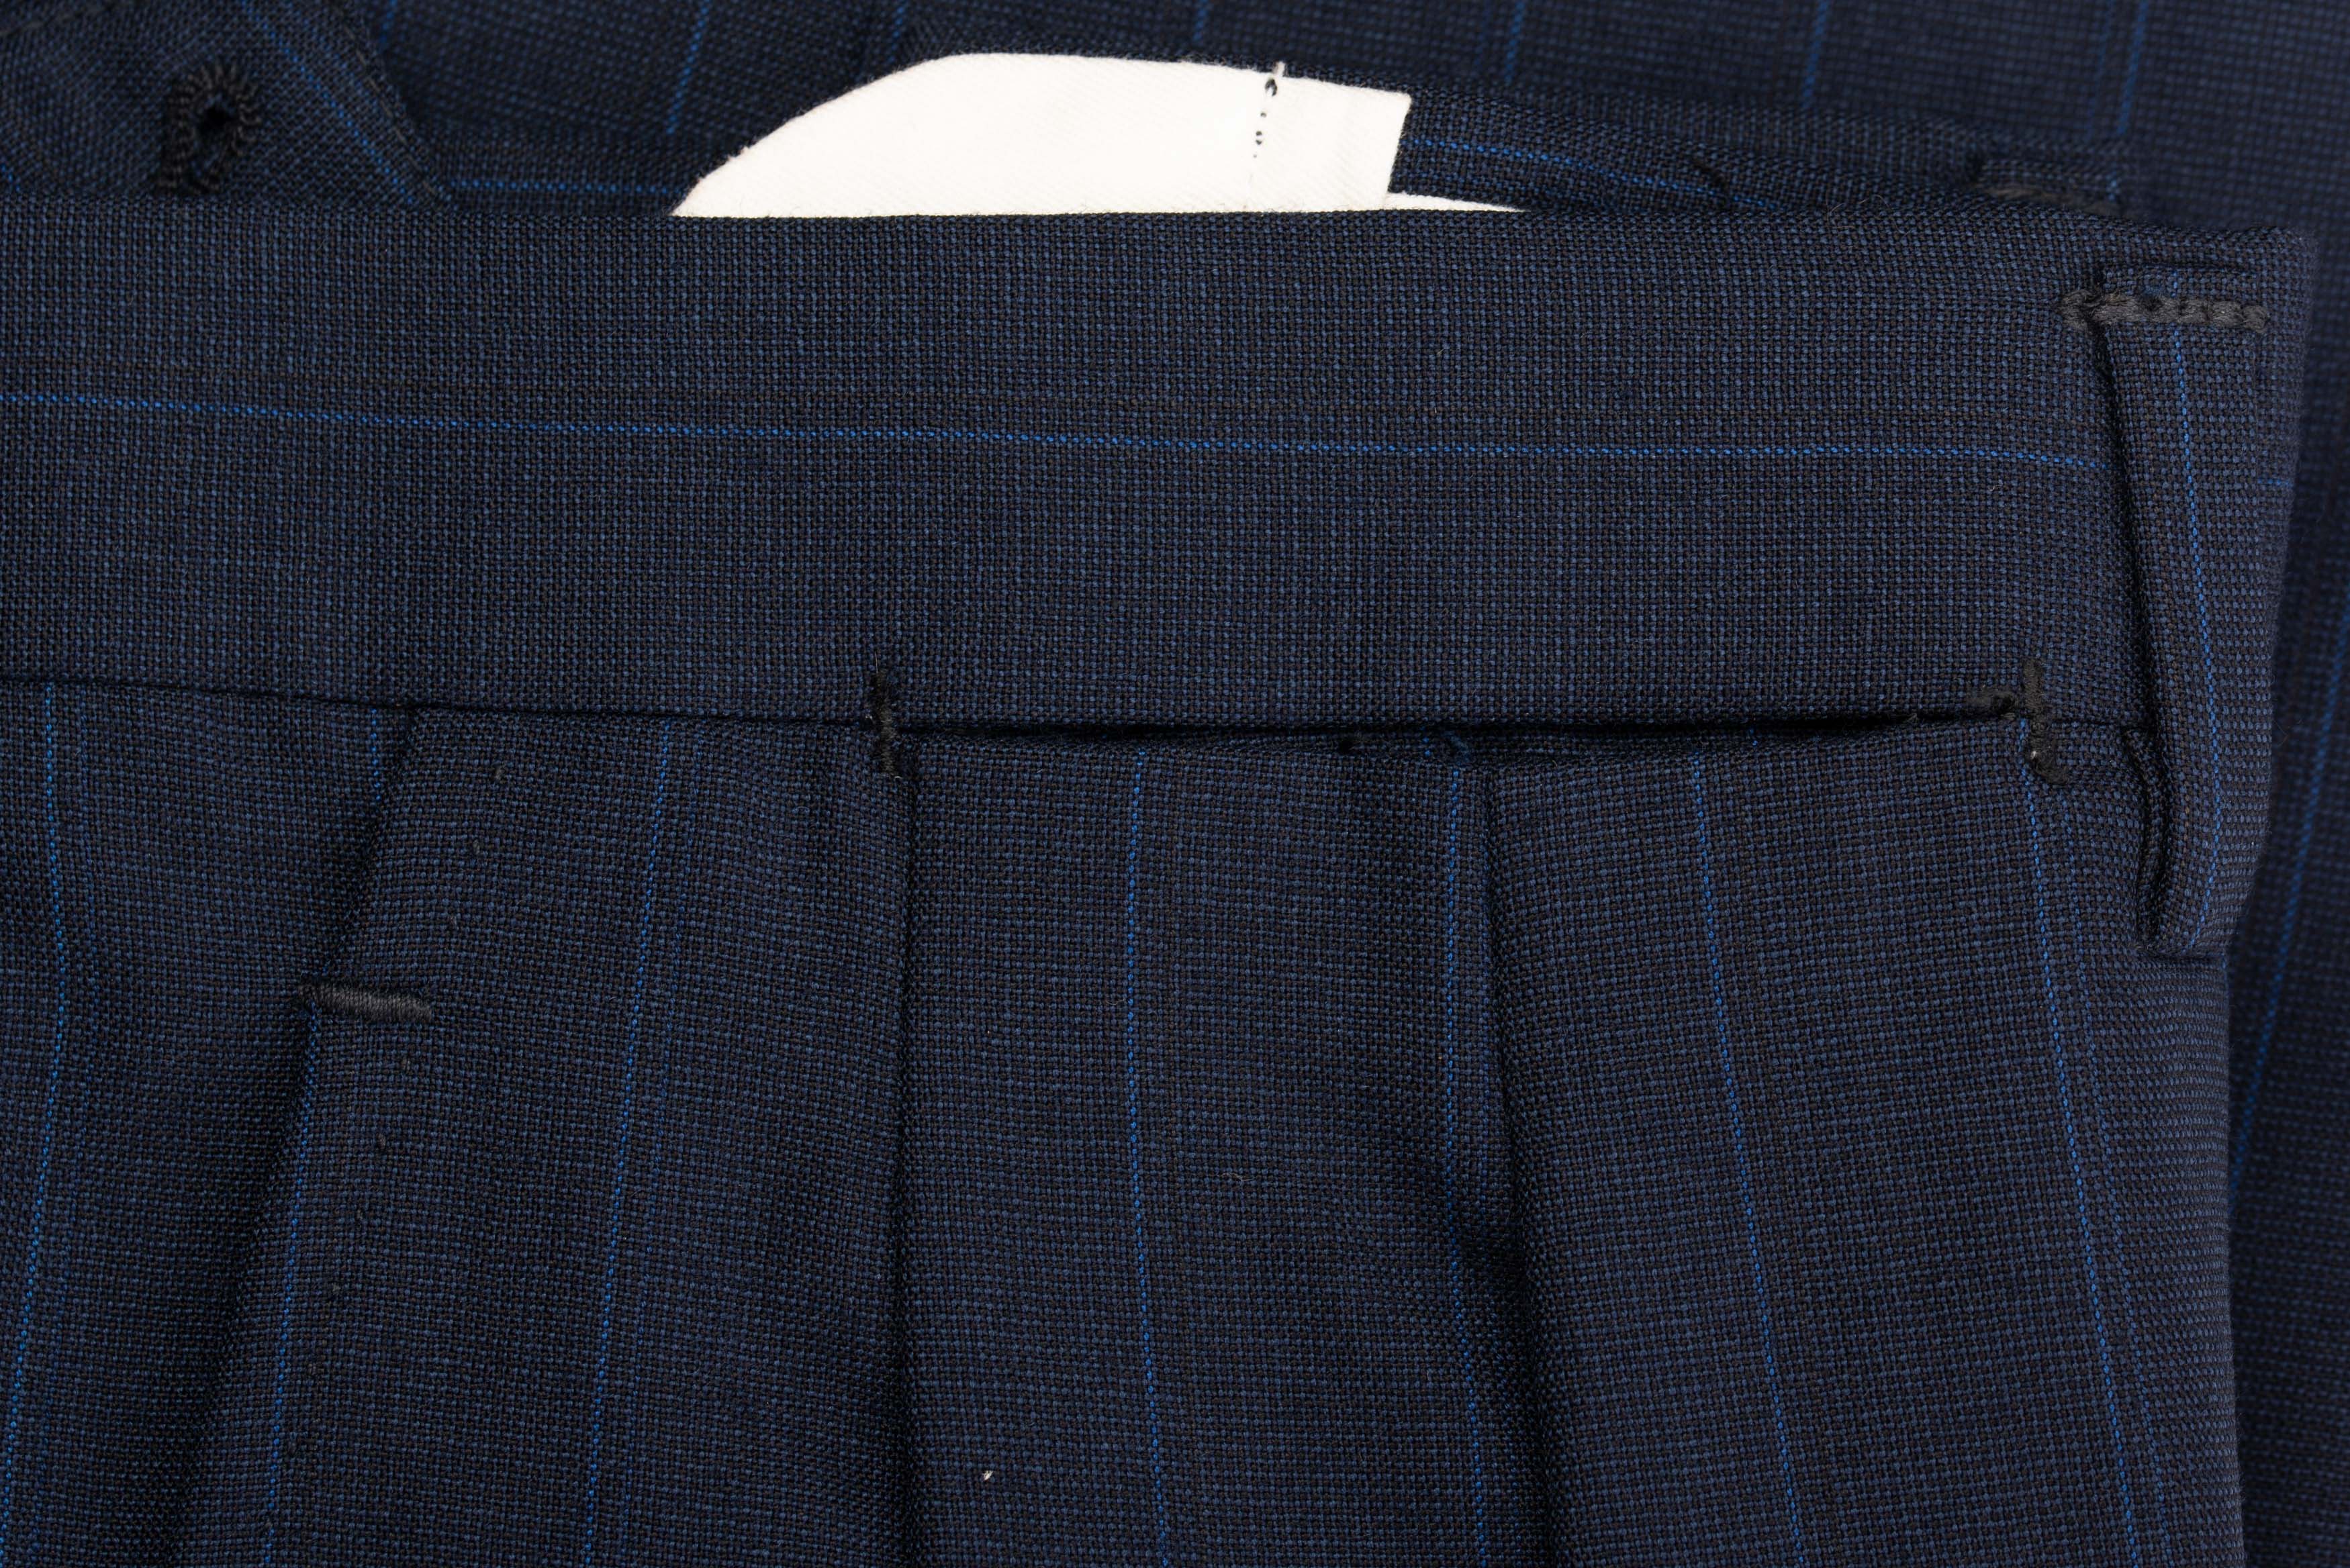 D'AVENZA Roma Blue Striped Wool DP Dress Pants EU 52 NEW US 36 Portly Fit